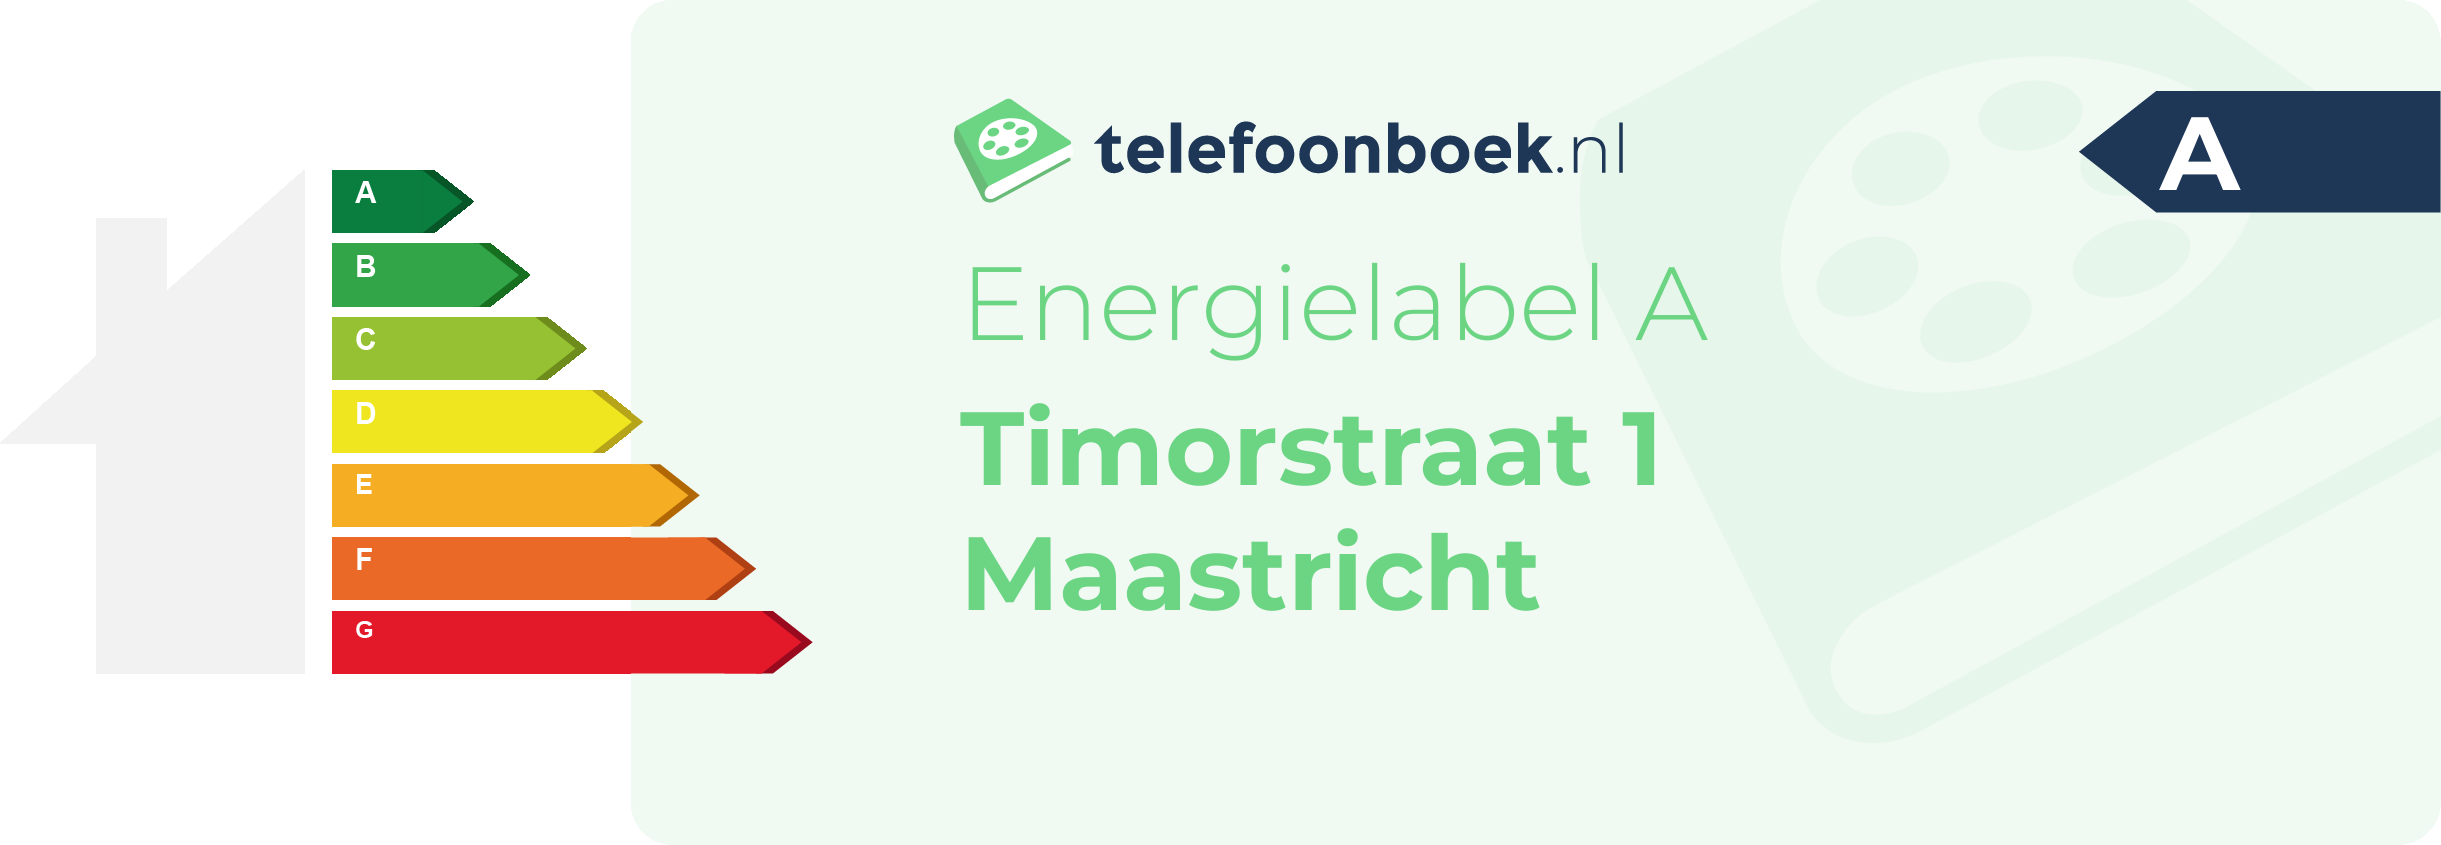 Energielabel Timorstraat 1 Maastricht